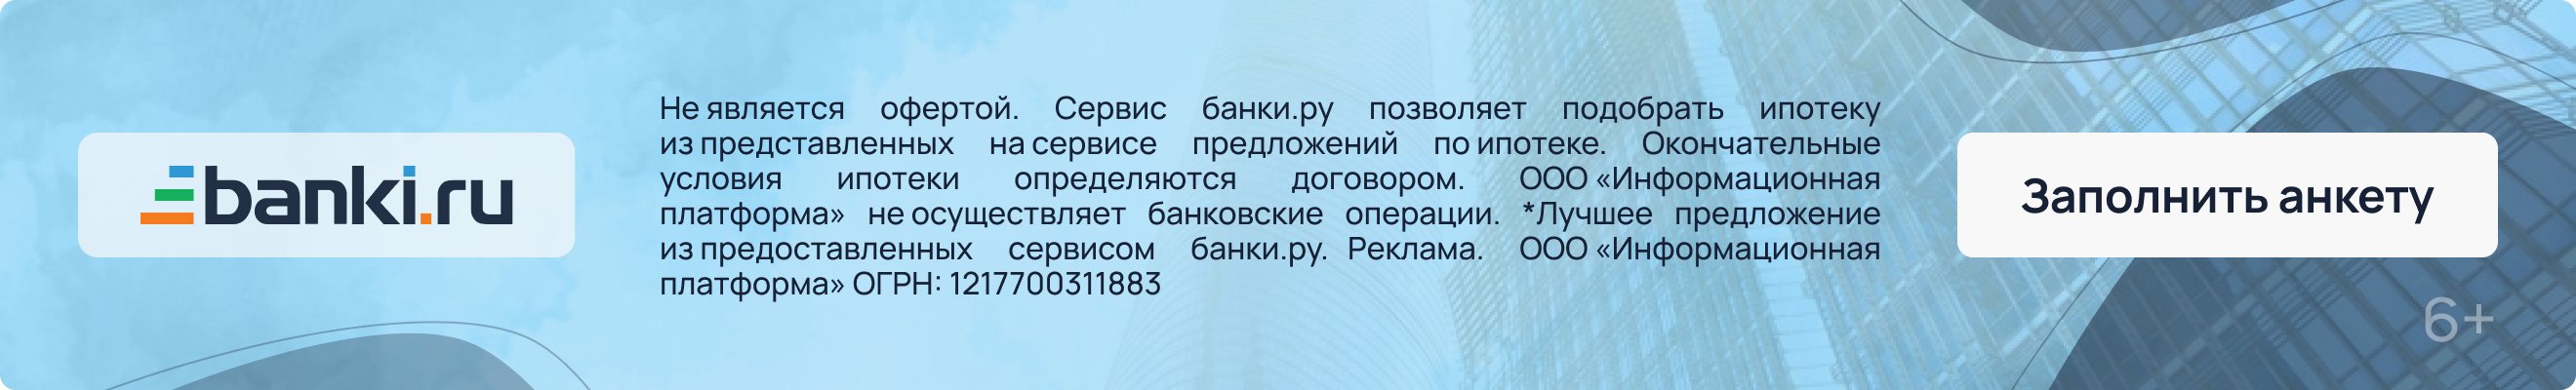 https://bankipartners.ru/s/dFwLYfRJvJ?statid=1051_&erid=2VtzqvsHQp4